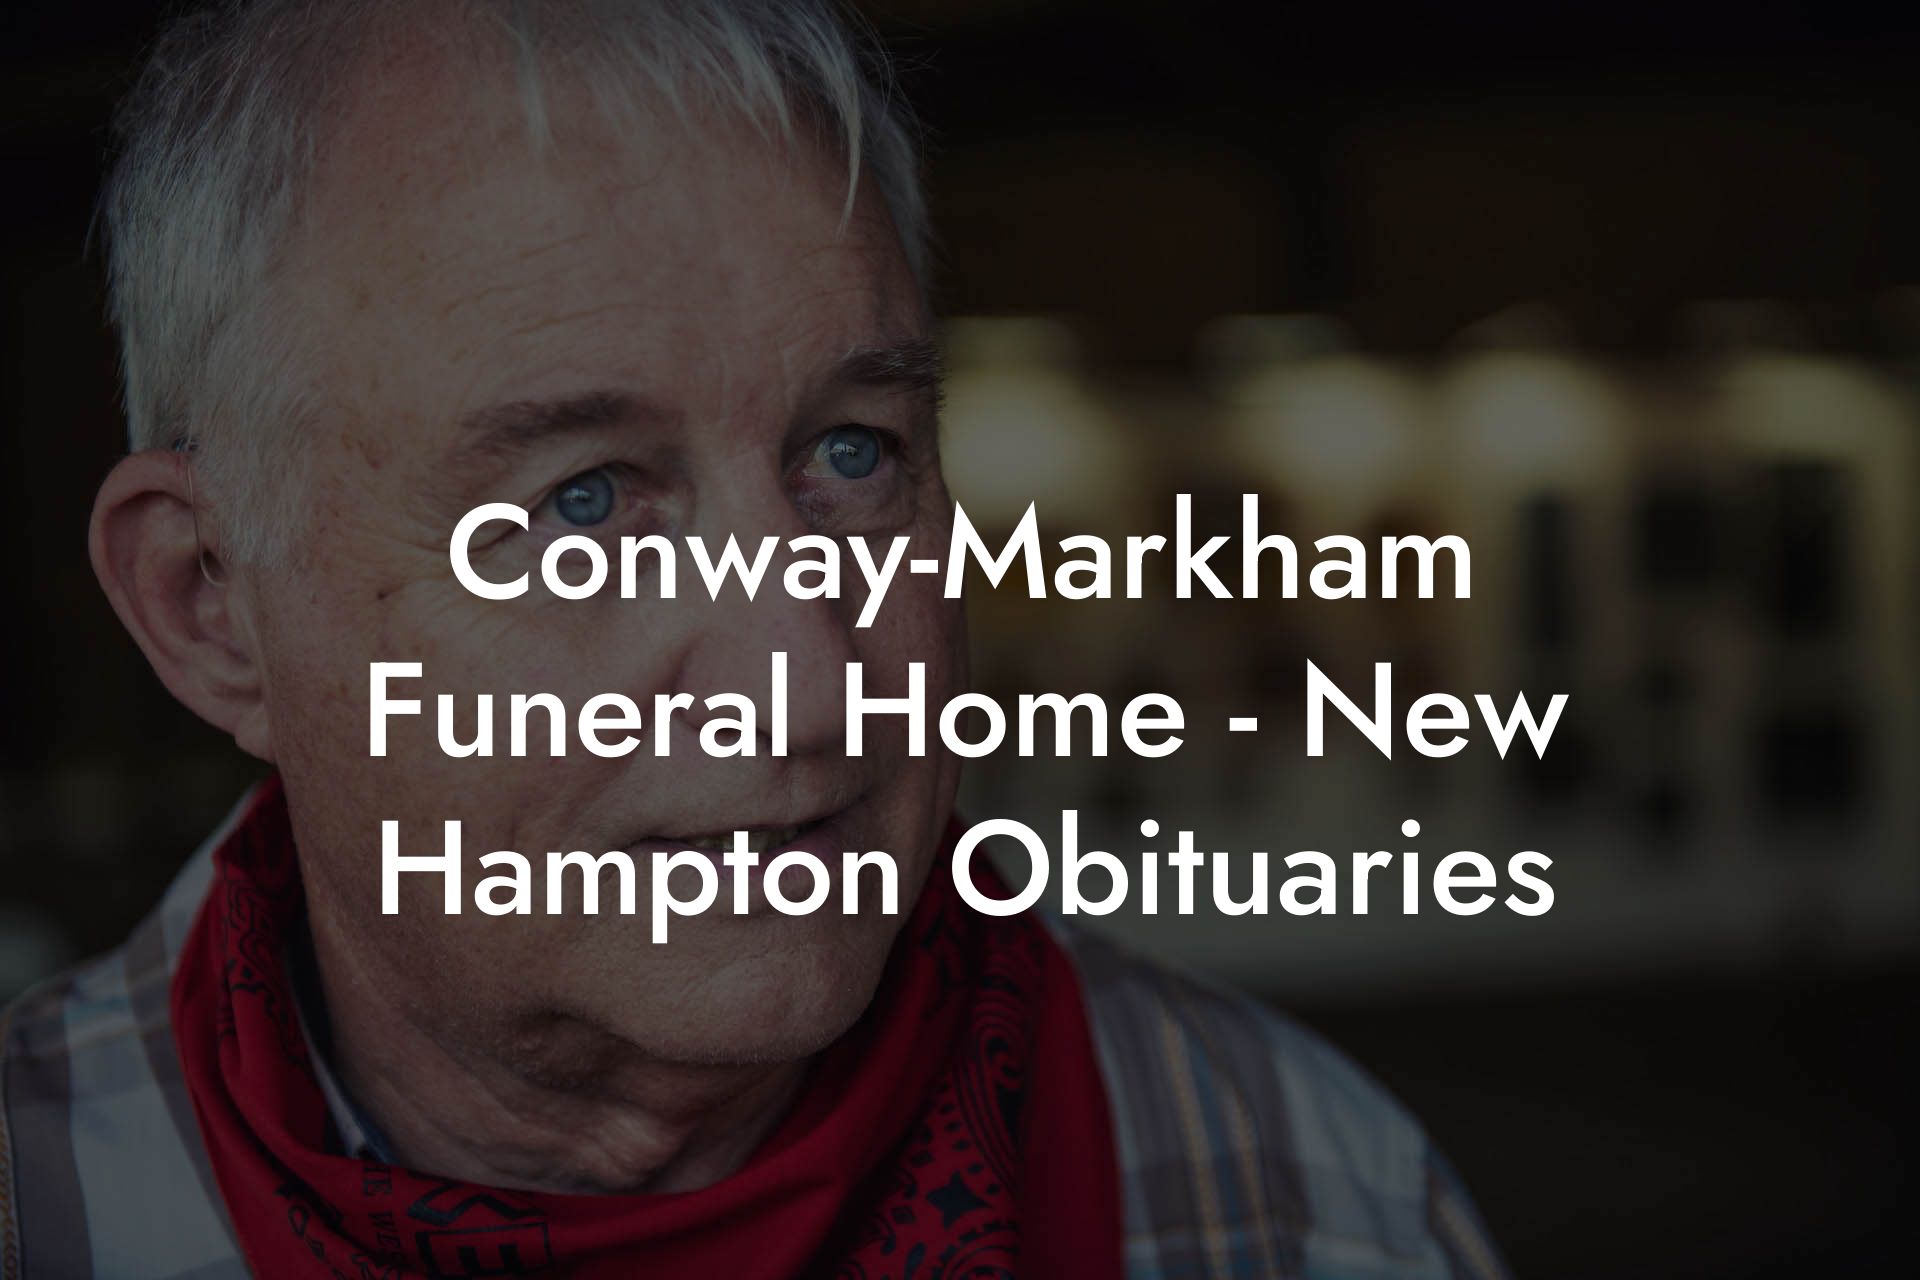 Conway-Markham Funeral Home - New Hampton Obituaries